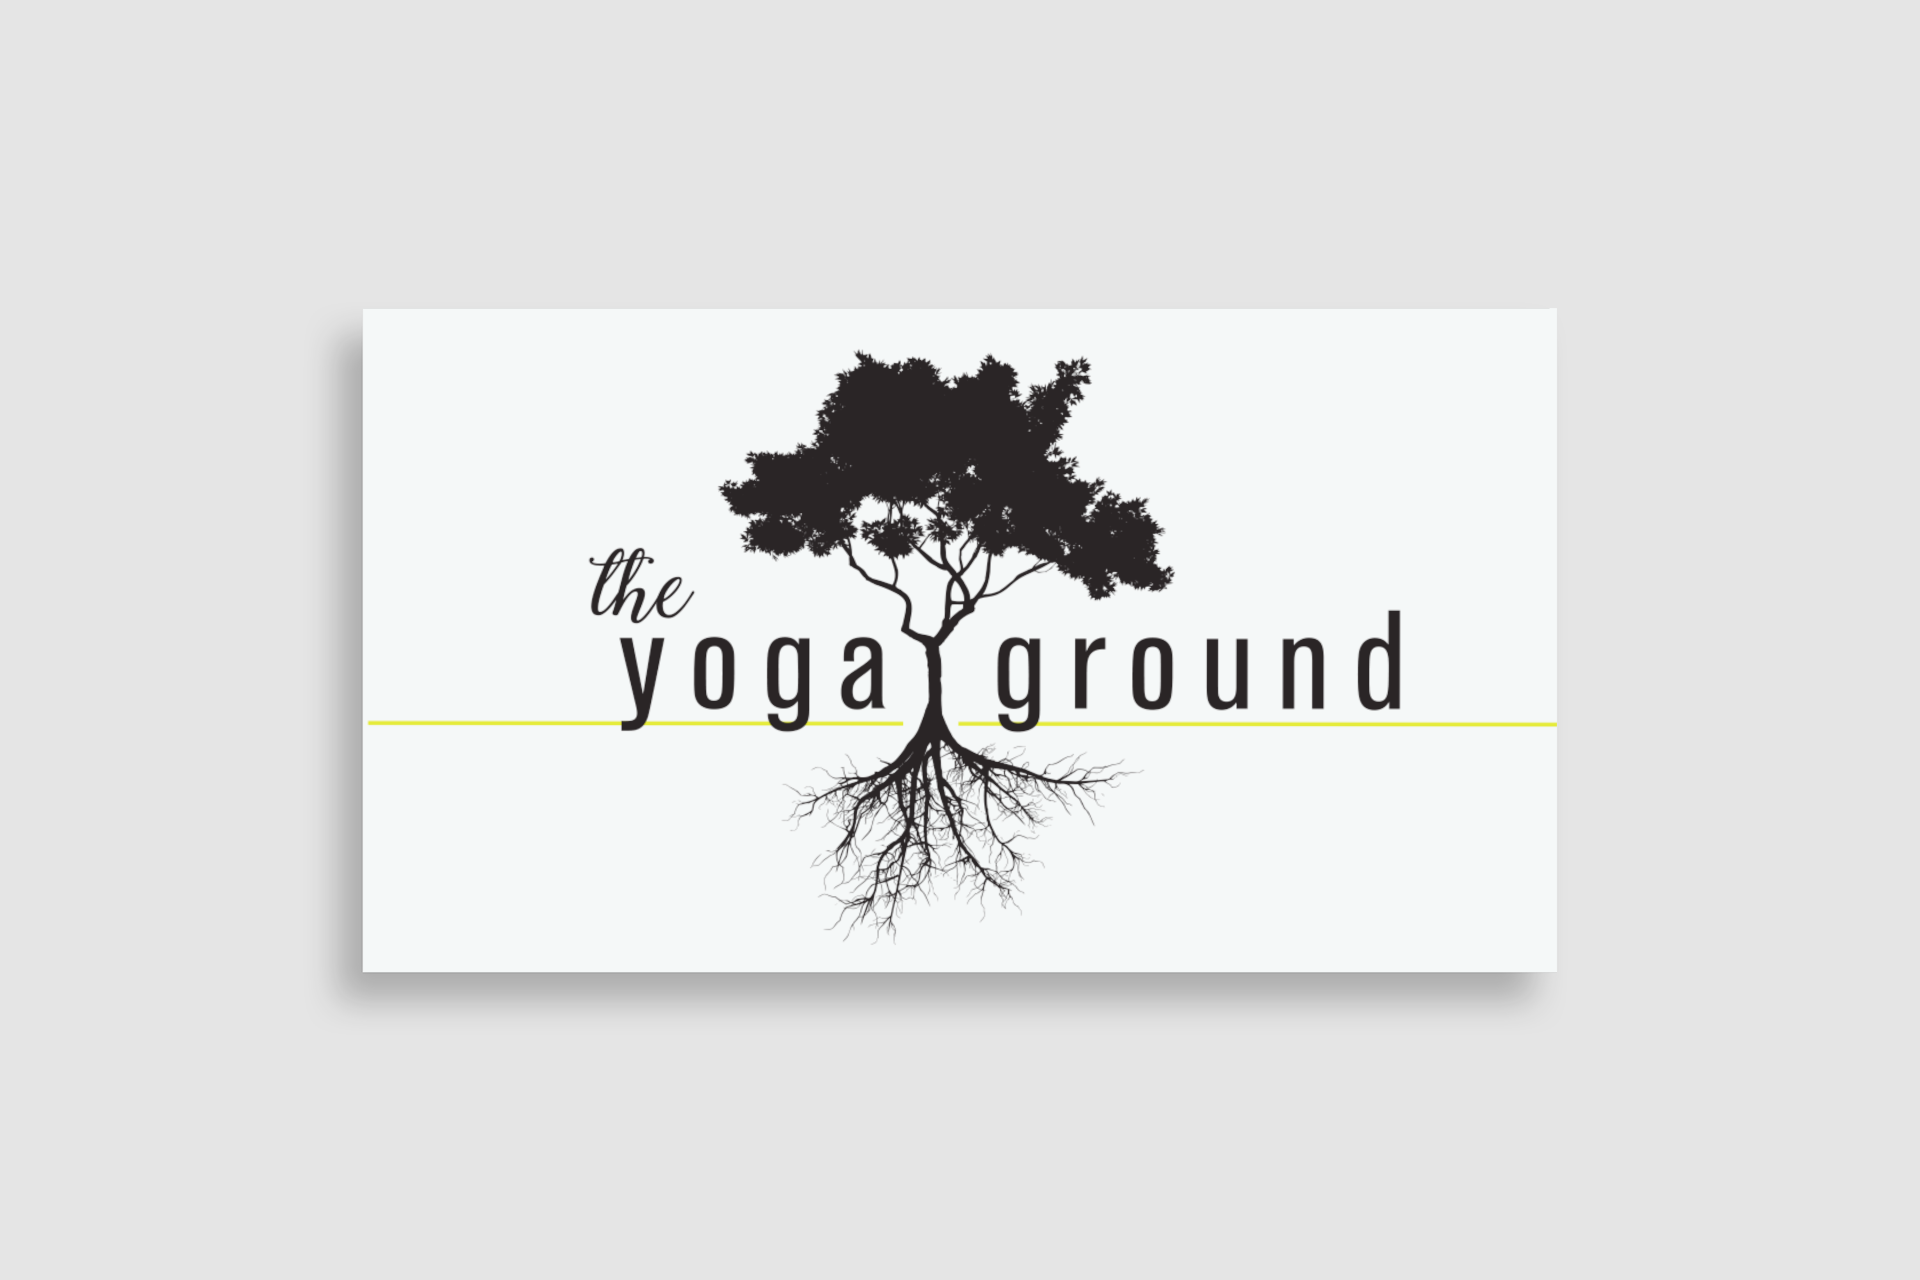 9-Yoga ground logo.png